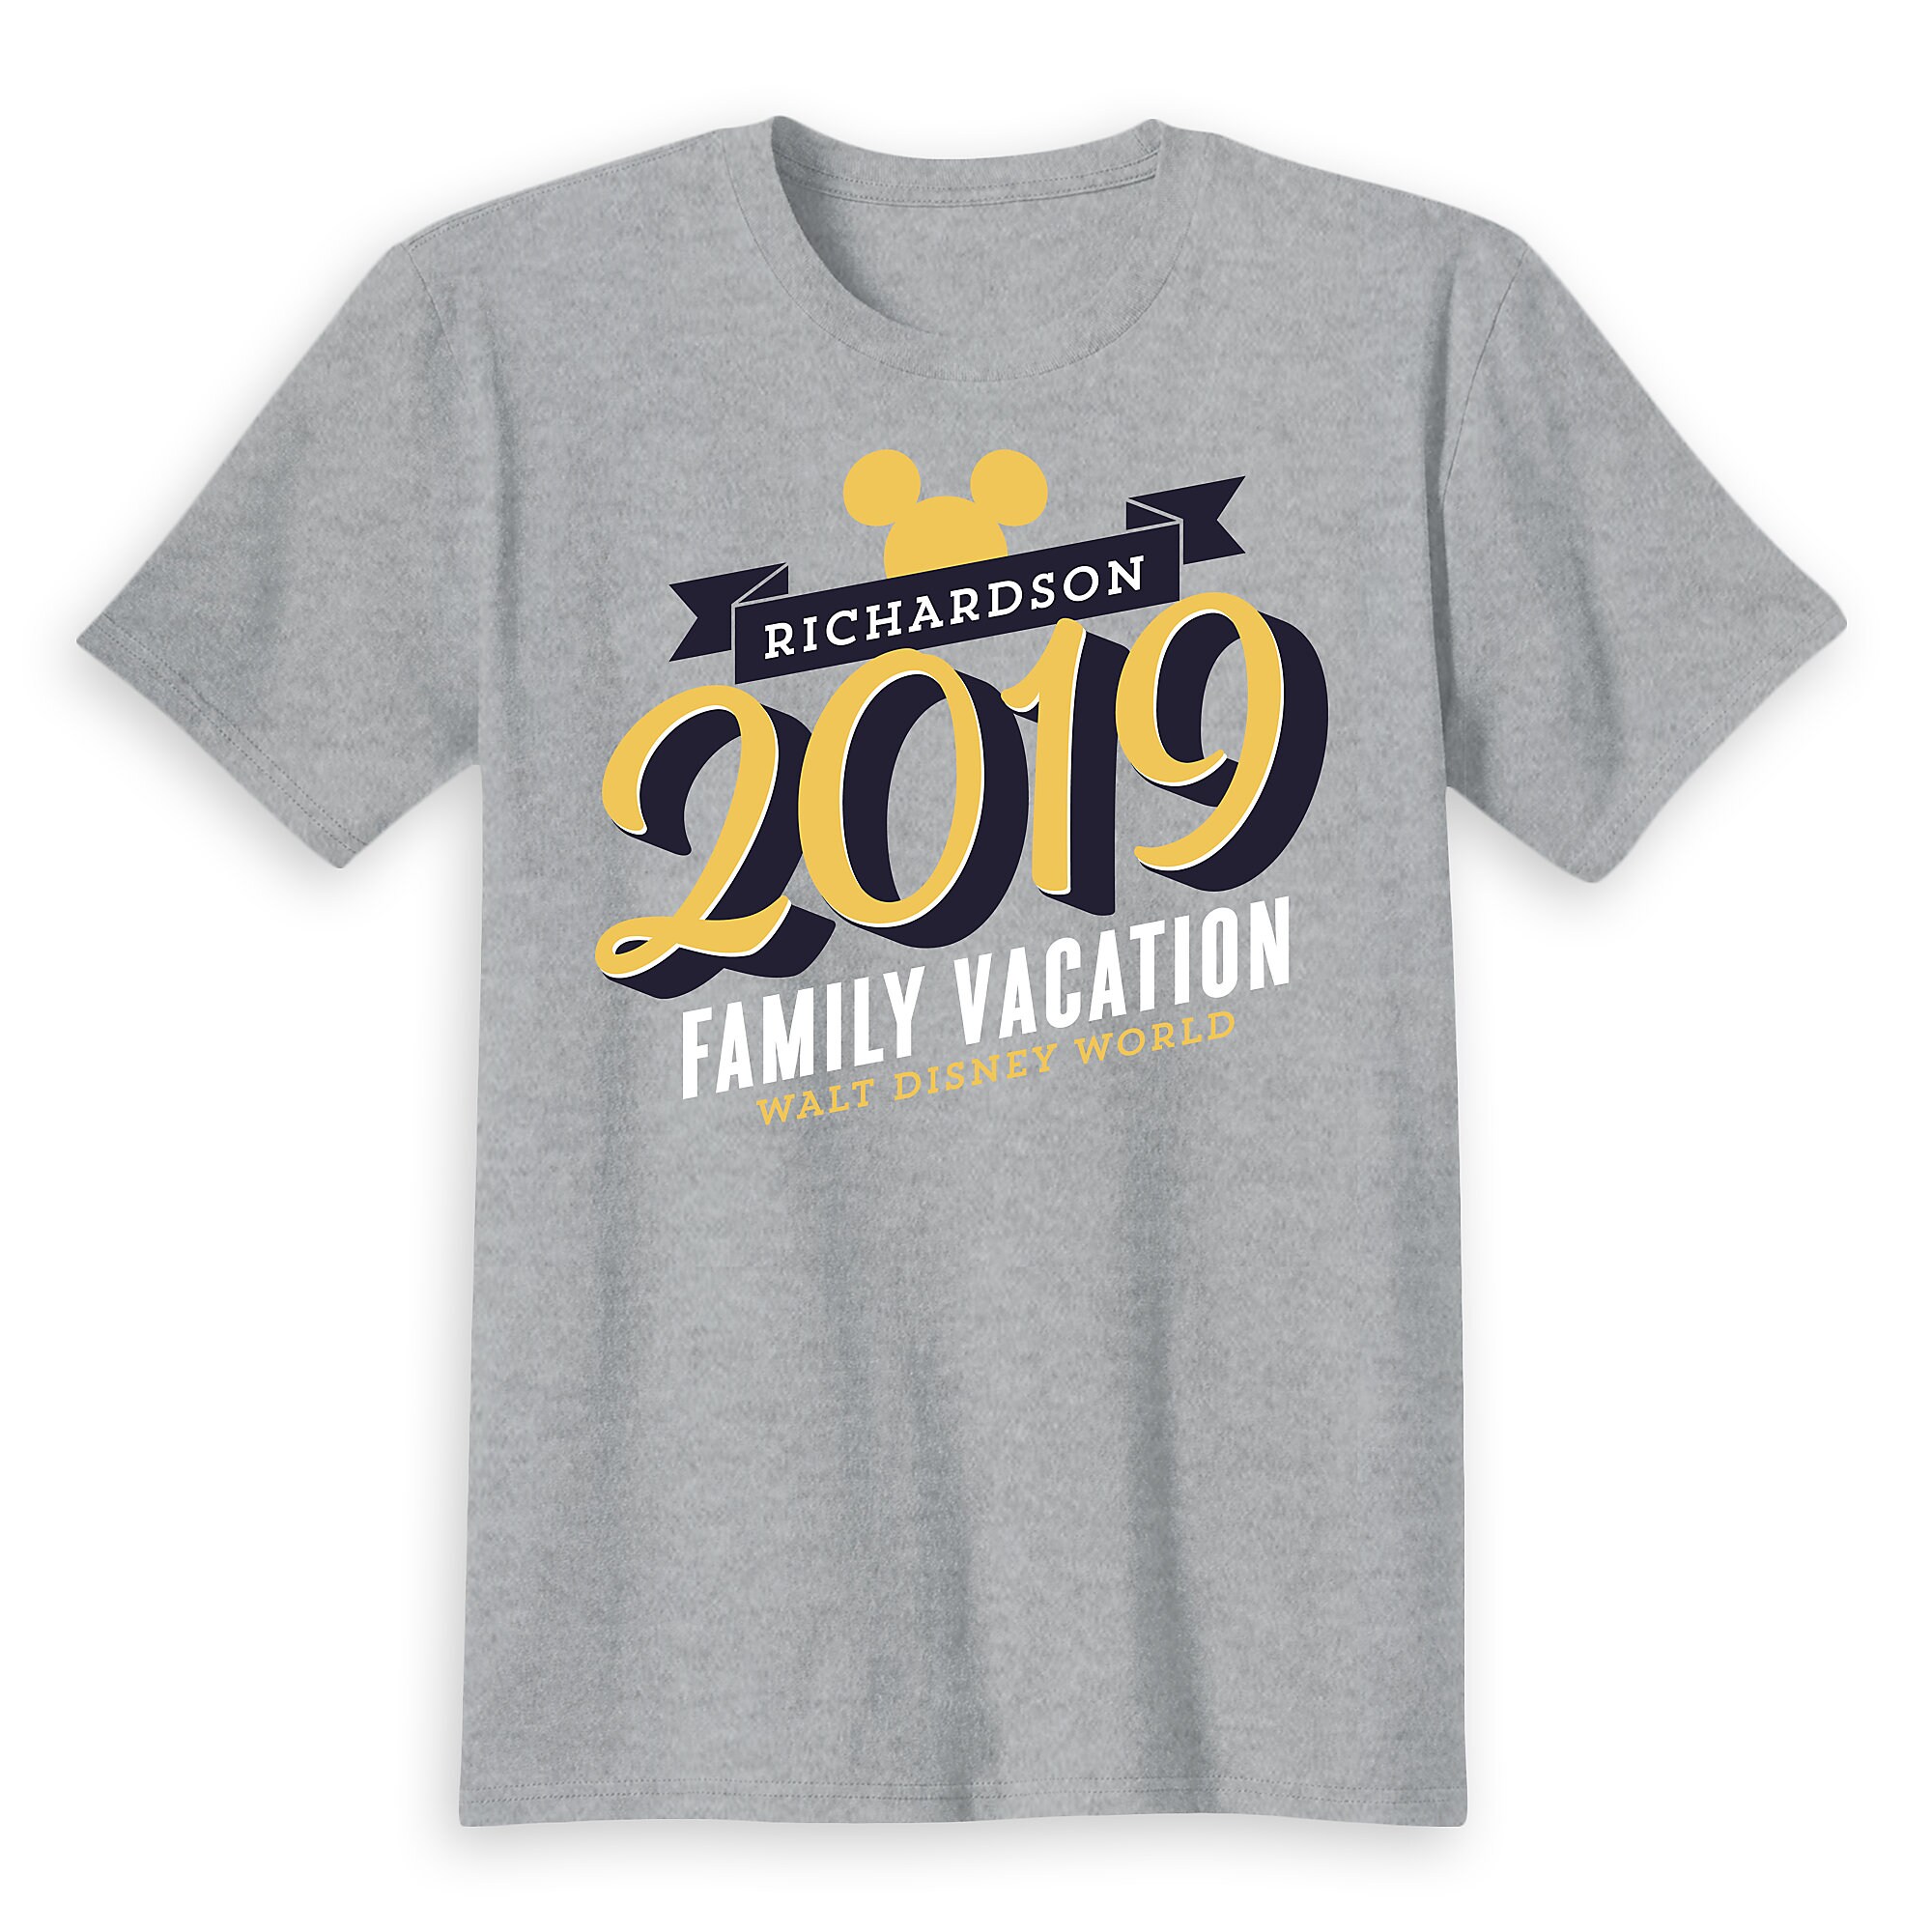 Kids' Mickey Mouse Family Vacation T-Shirt - Walt Disney World - 2019 - Customized